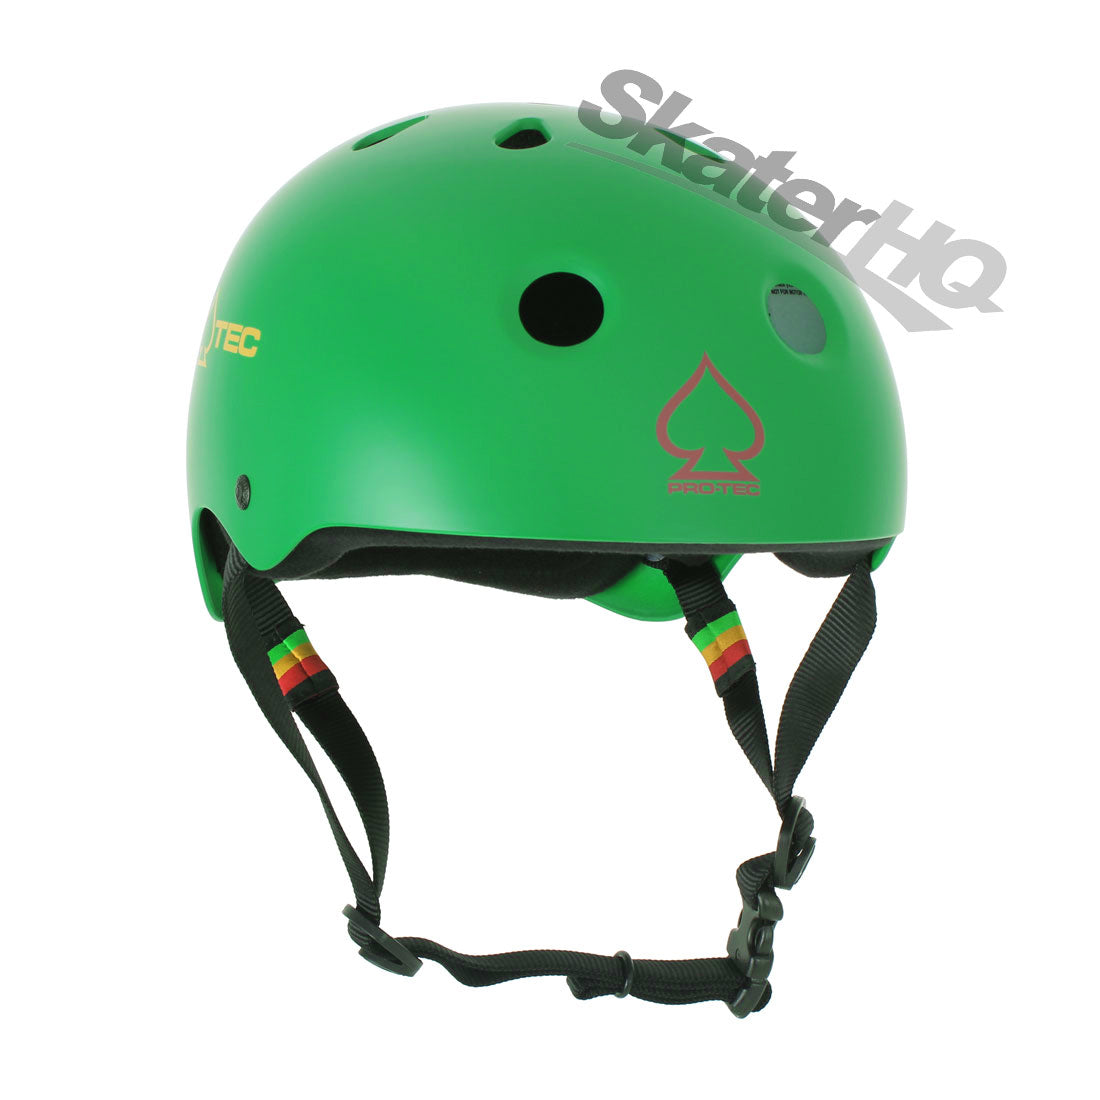 Pro-Tec Classic Skate Matte Rasta Green - Large Helmets